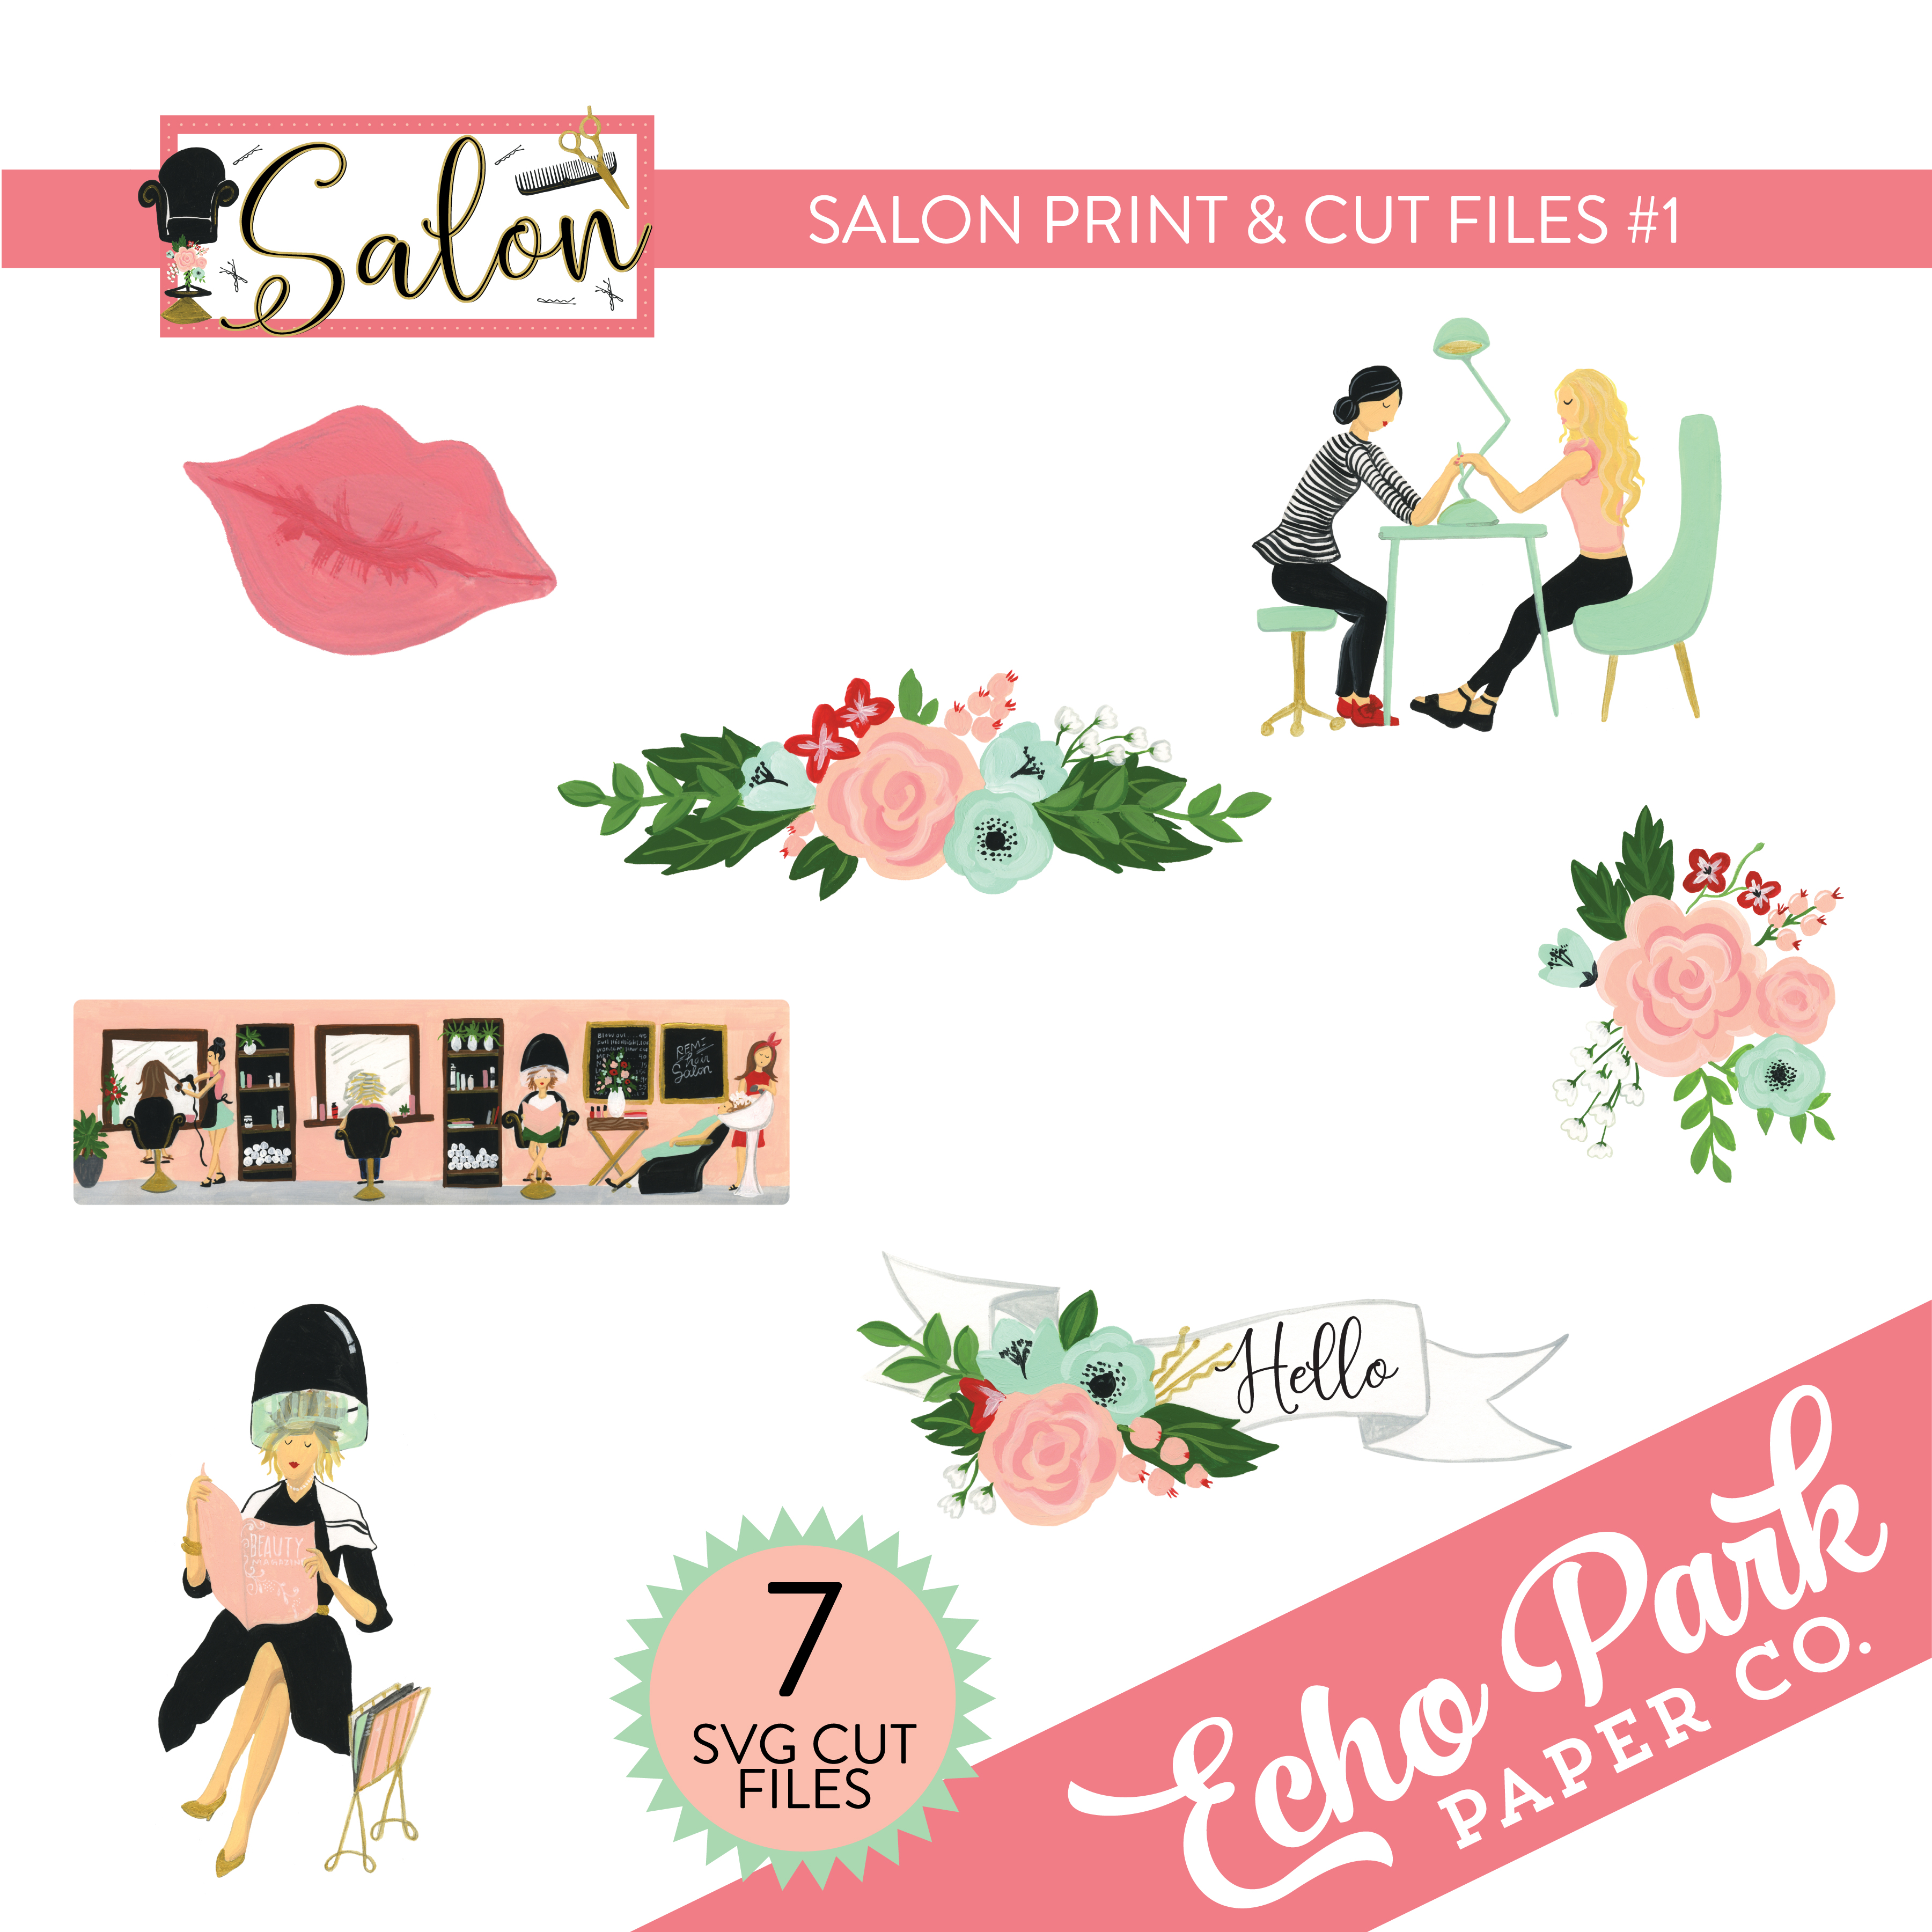 Salon Print & Cut Files #1